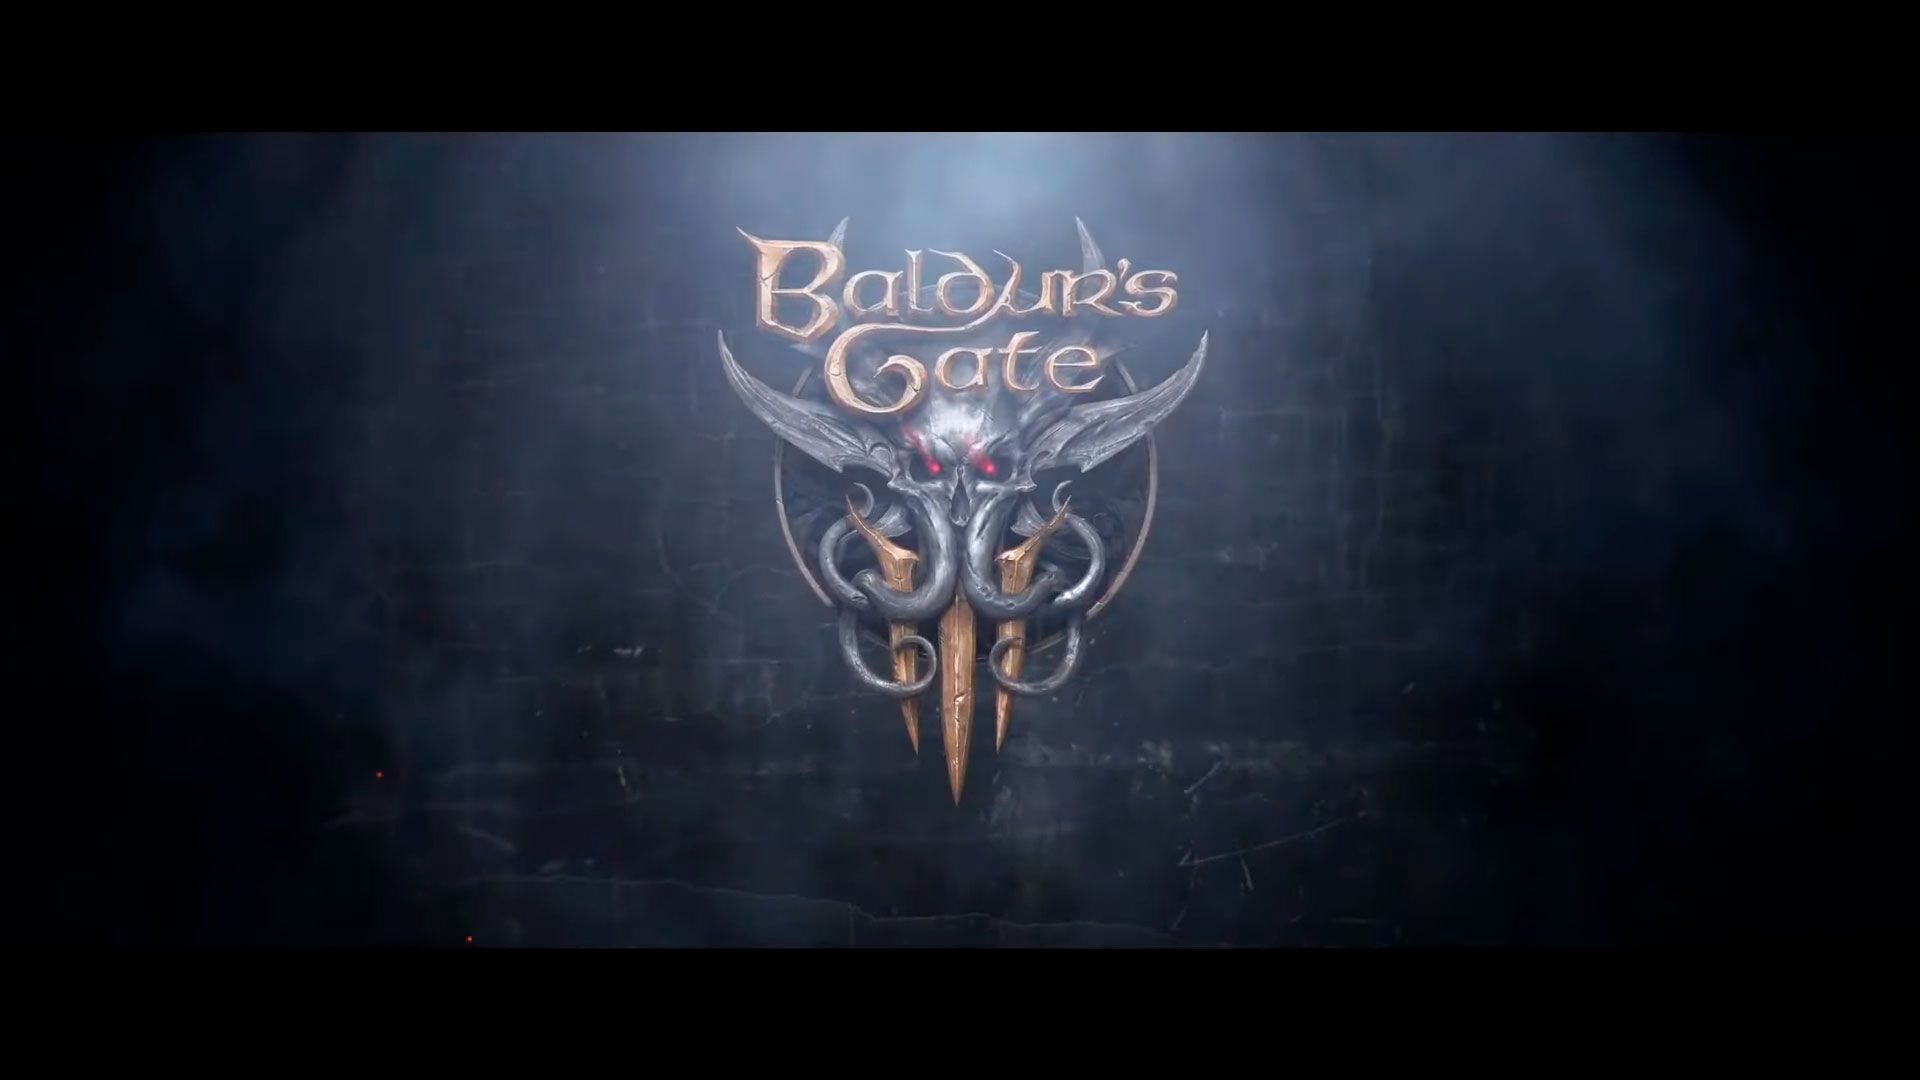 Echamos un vistazo a Baldur's Gate 3 en PAX East 2020.